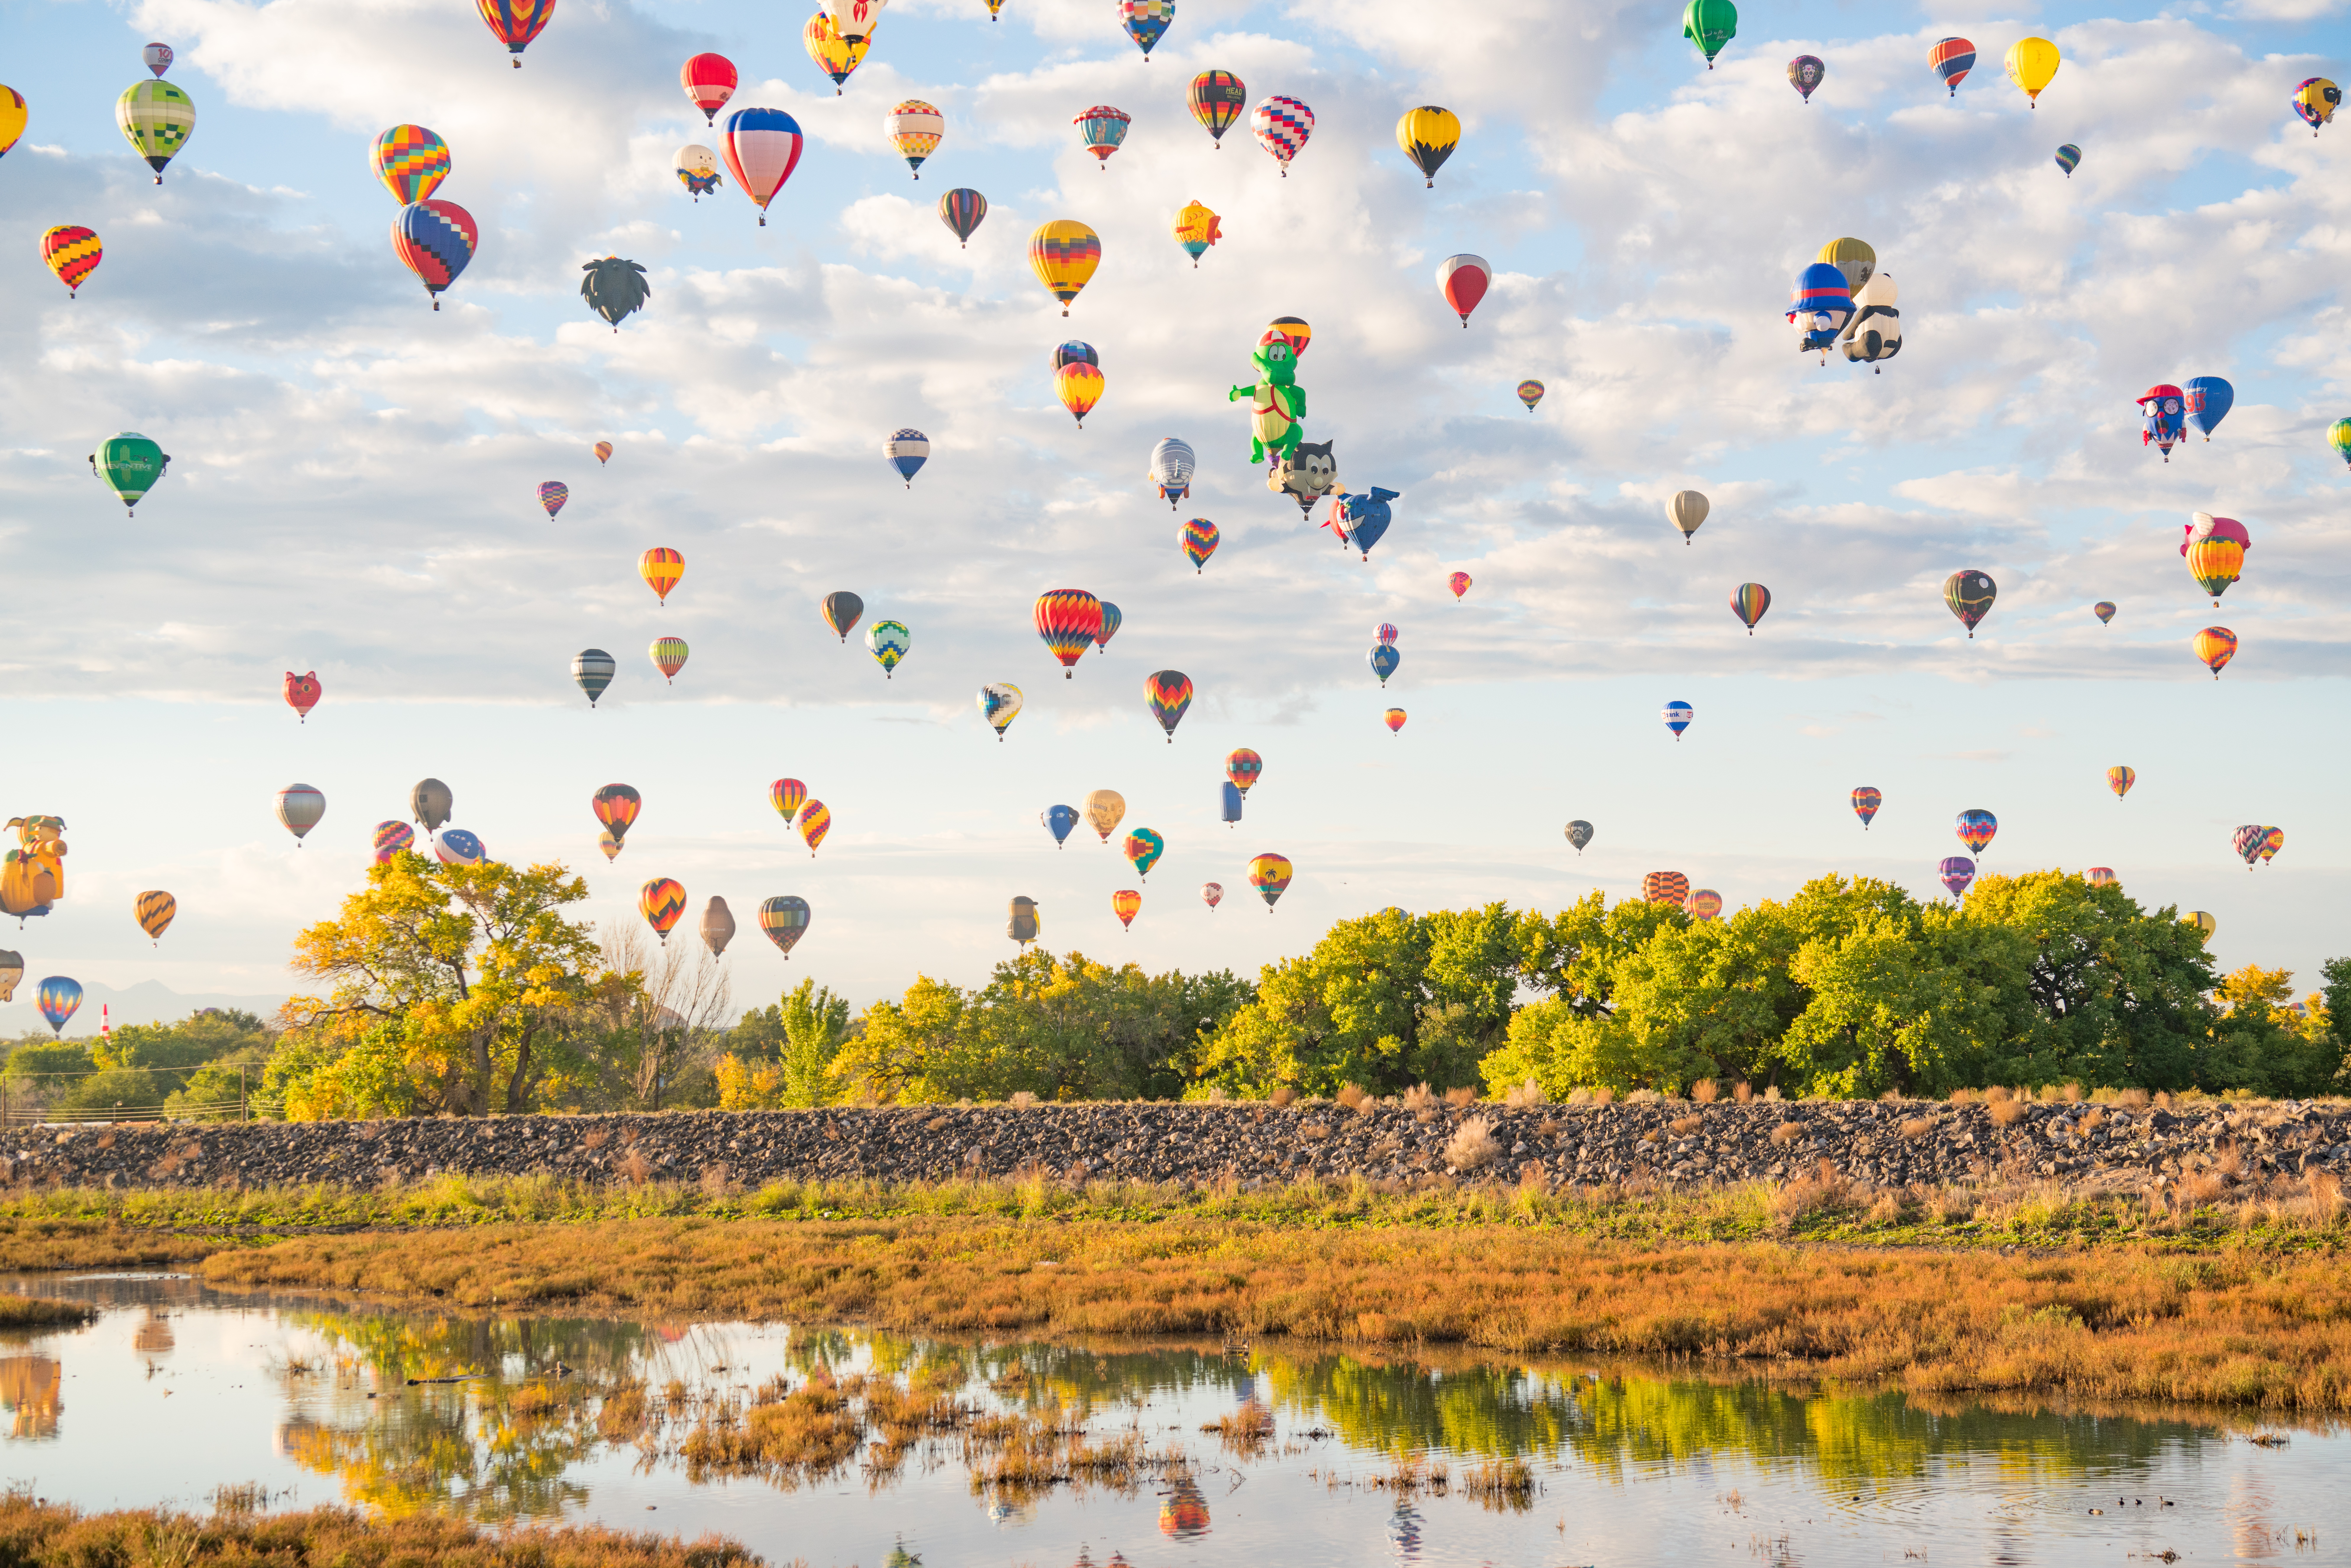 Lift Off: The Albuquerque International Balloon Fiesta